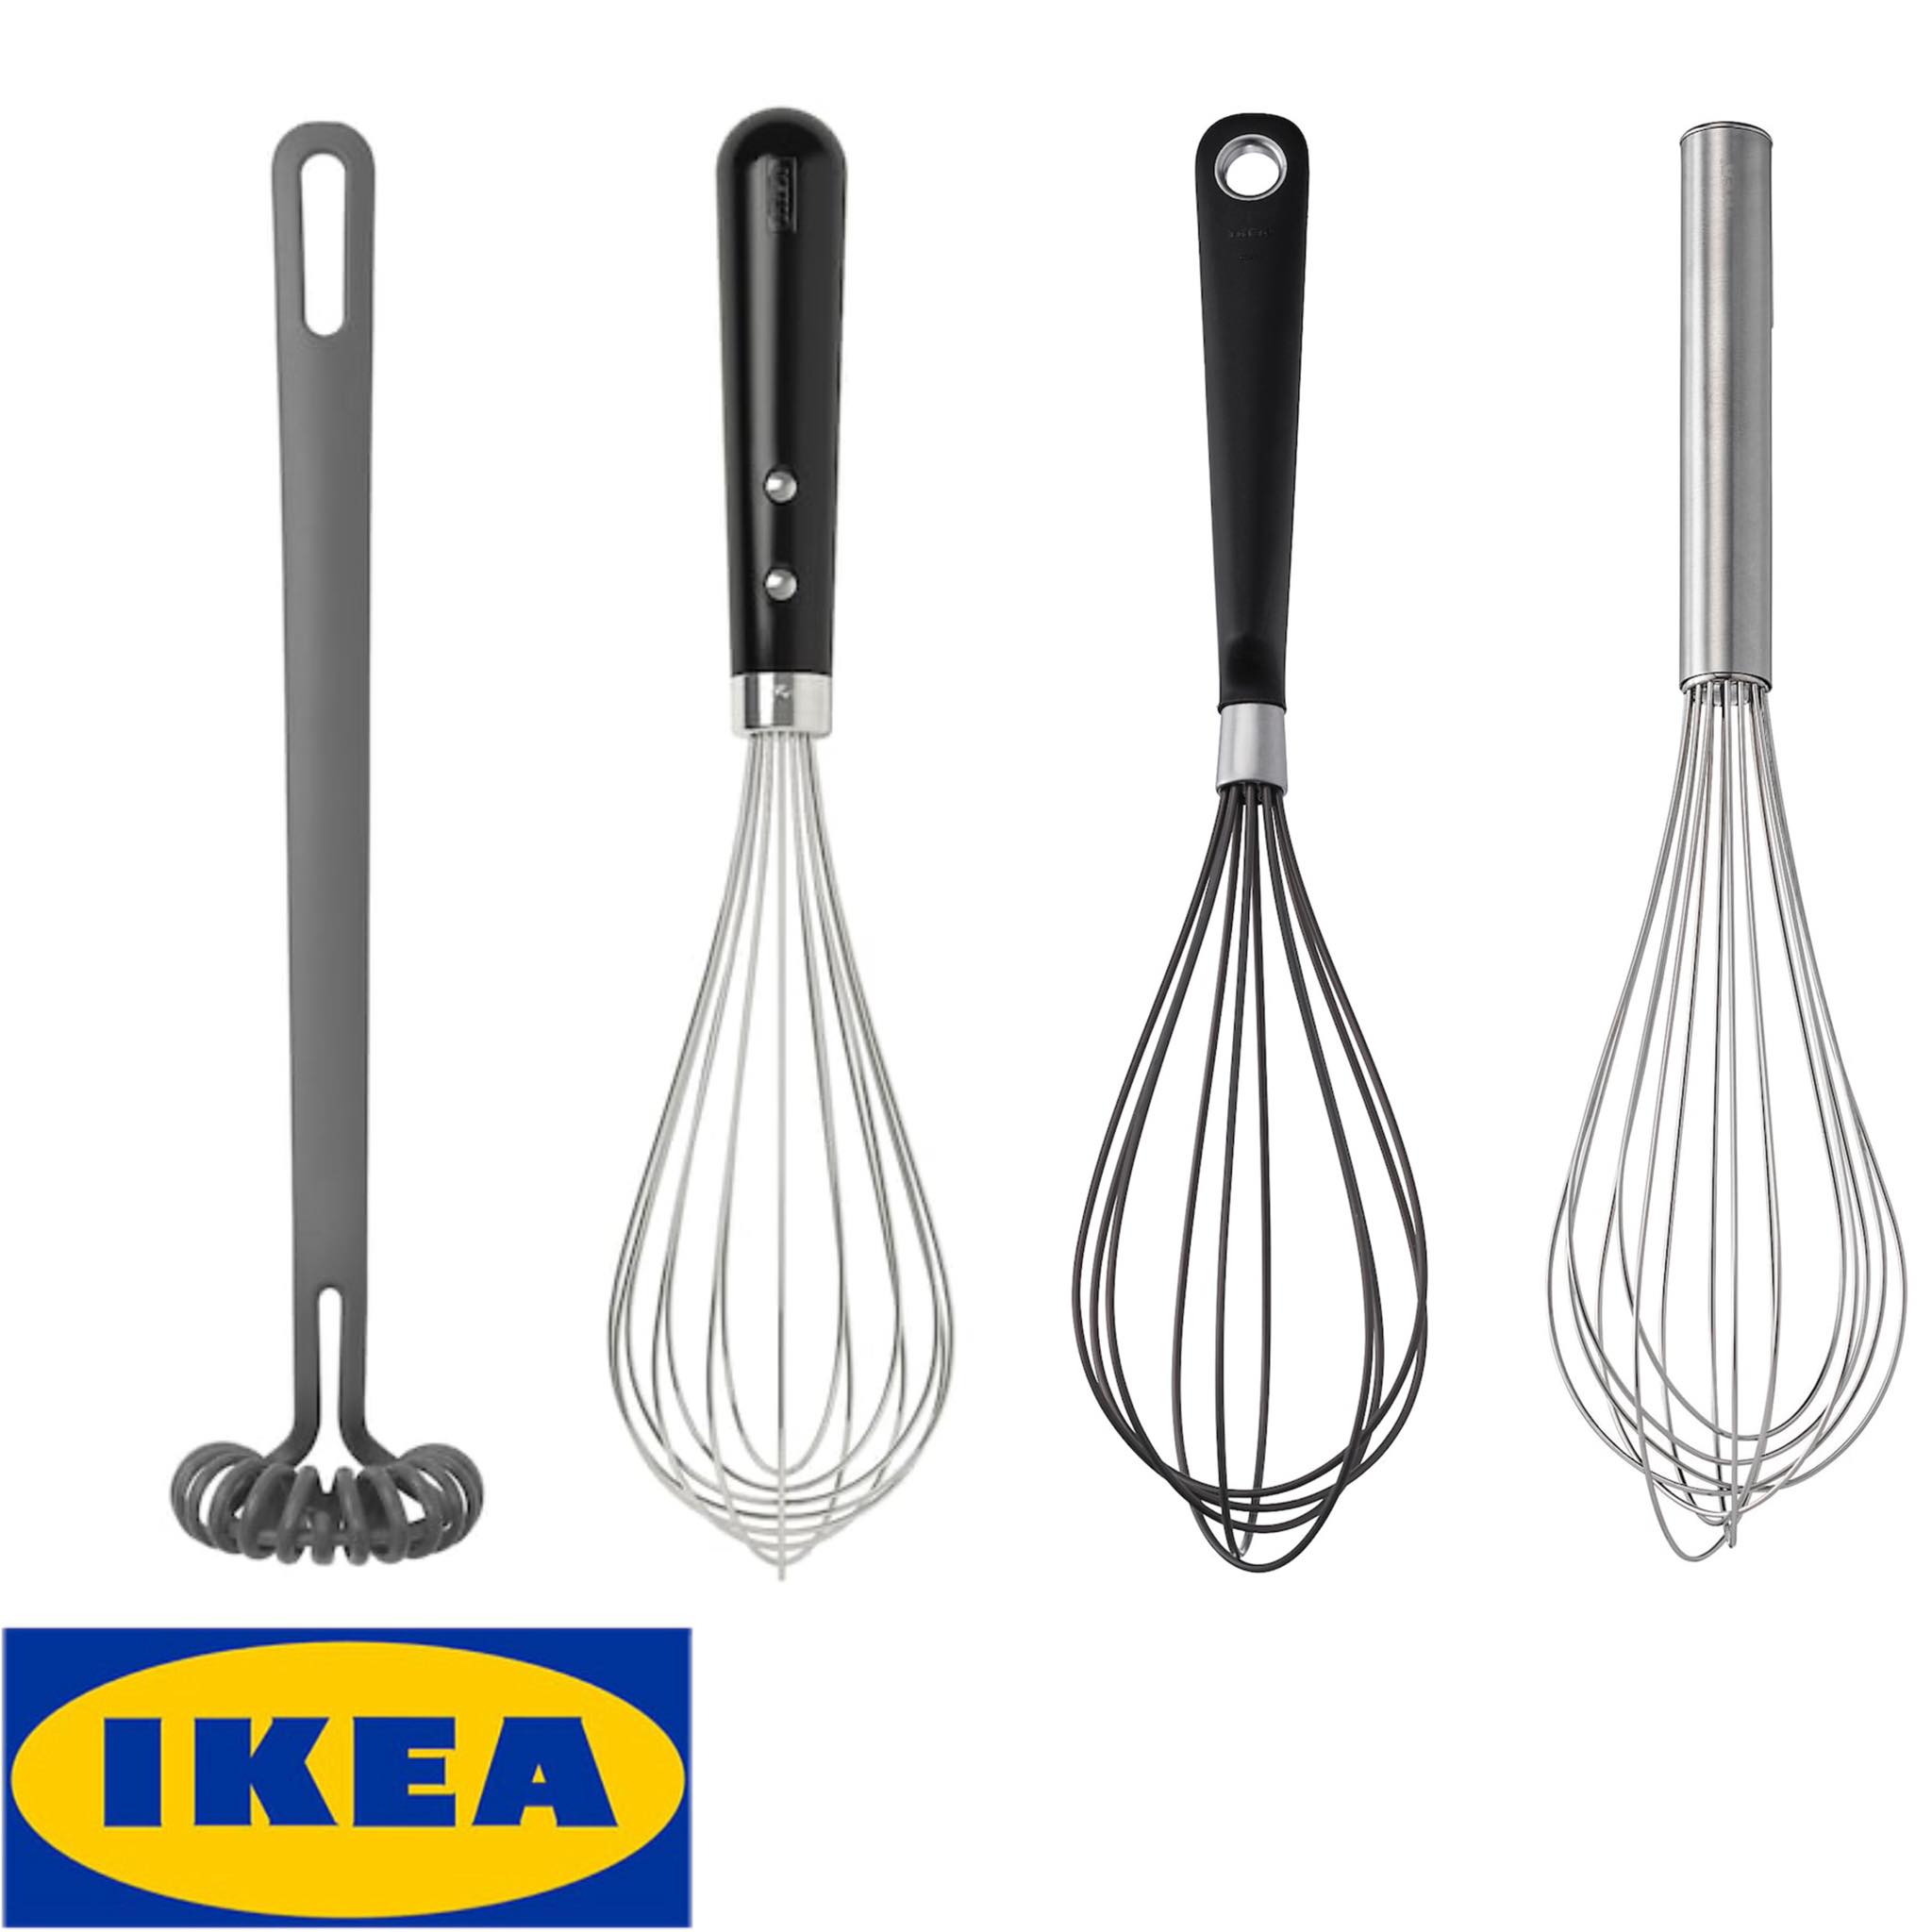 IKEA ของแท้ ตะกร้อมือ***มีหลายแบบให้เลือกจากซีรีส์ต่างๆของทาง IKEA***